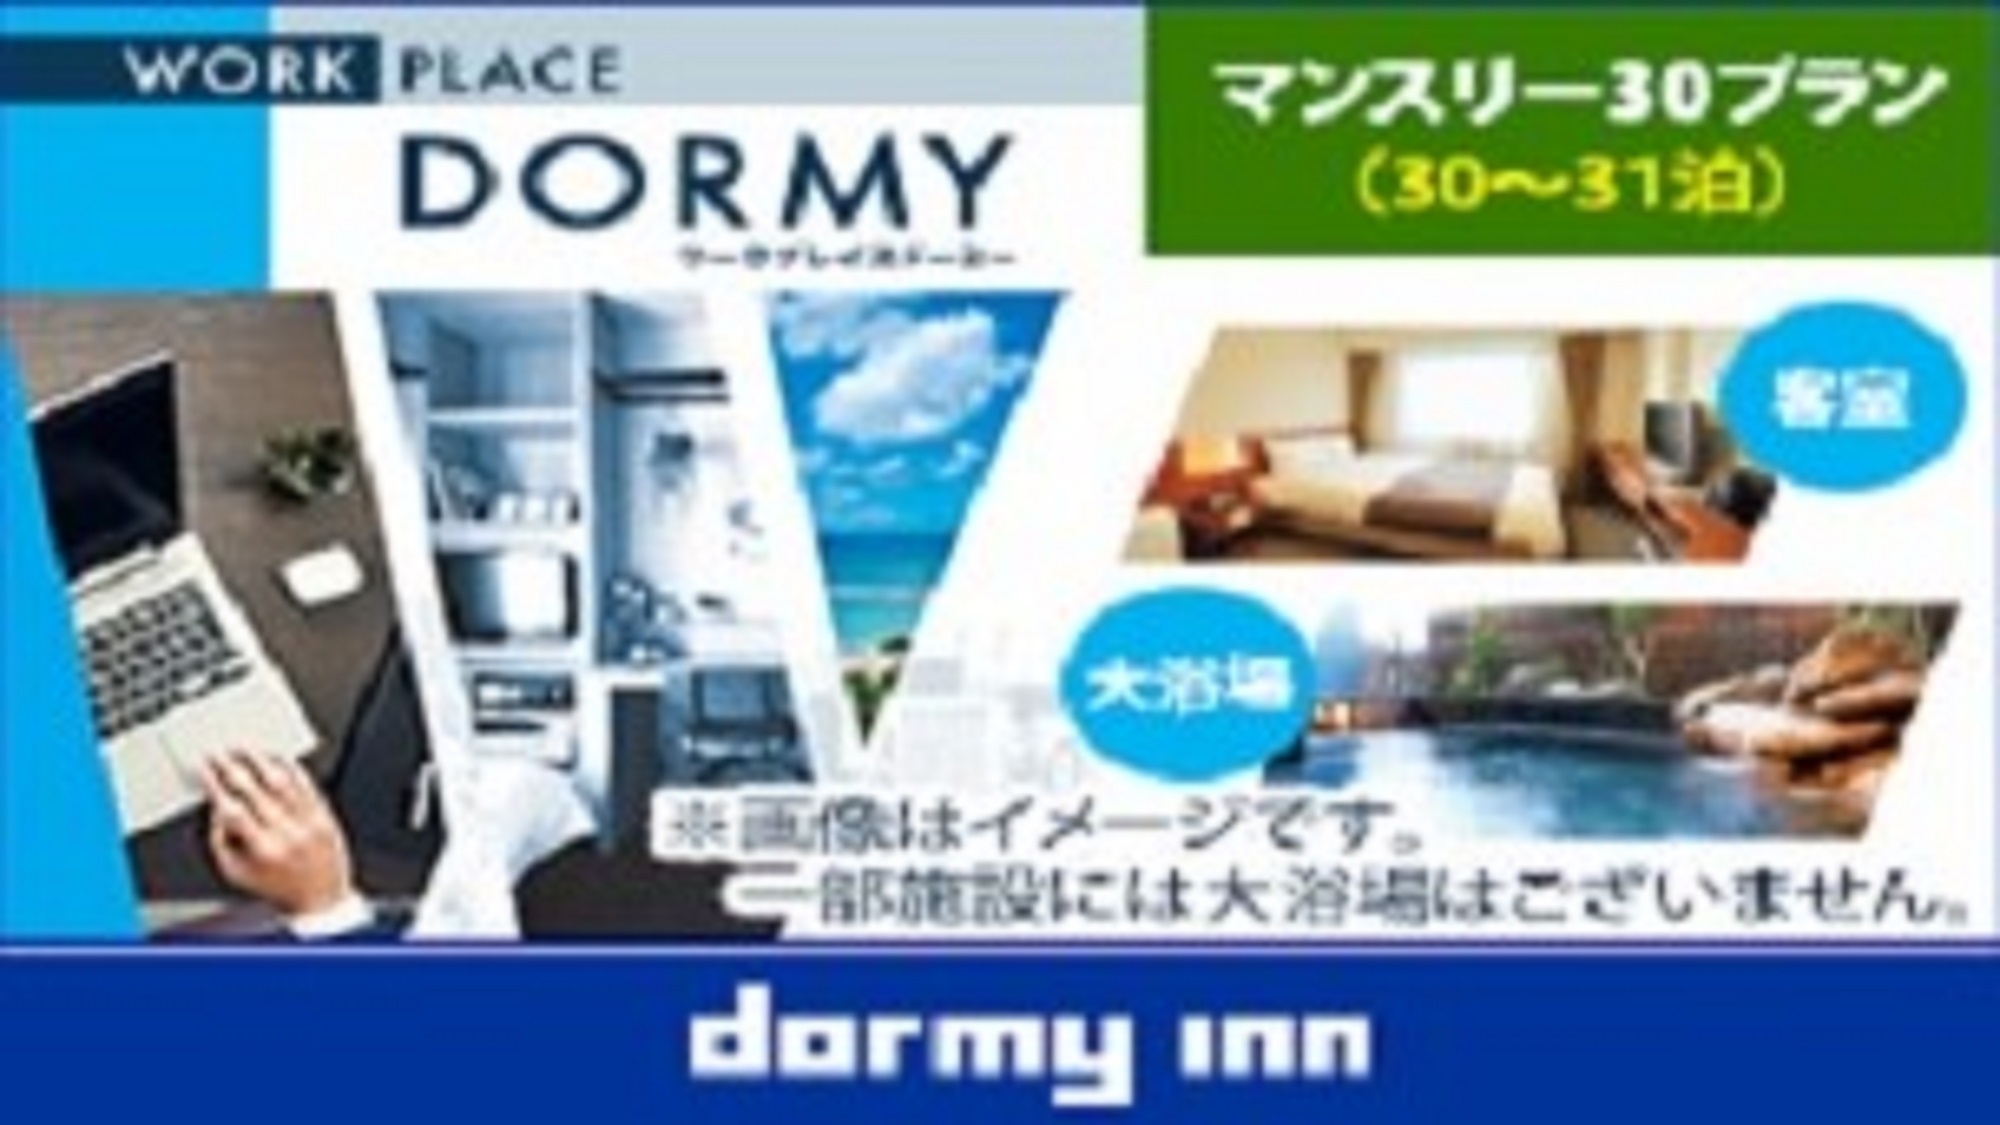 【WORK PLACE DORMY】マンスリープラン（30〜31泊）≪朝食付き・清掃なし≫